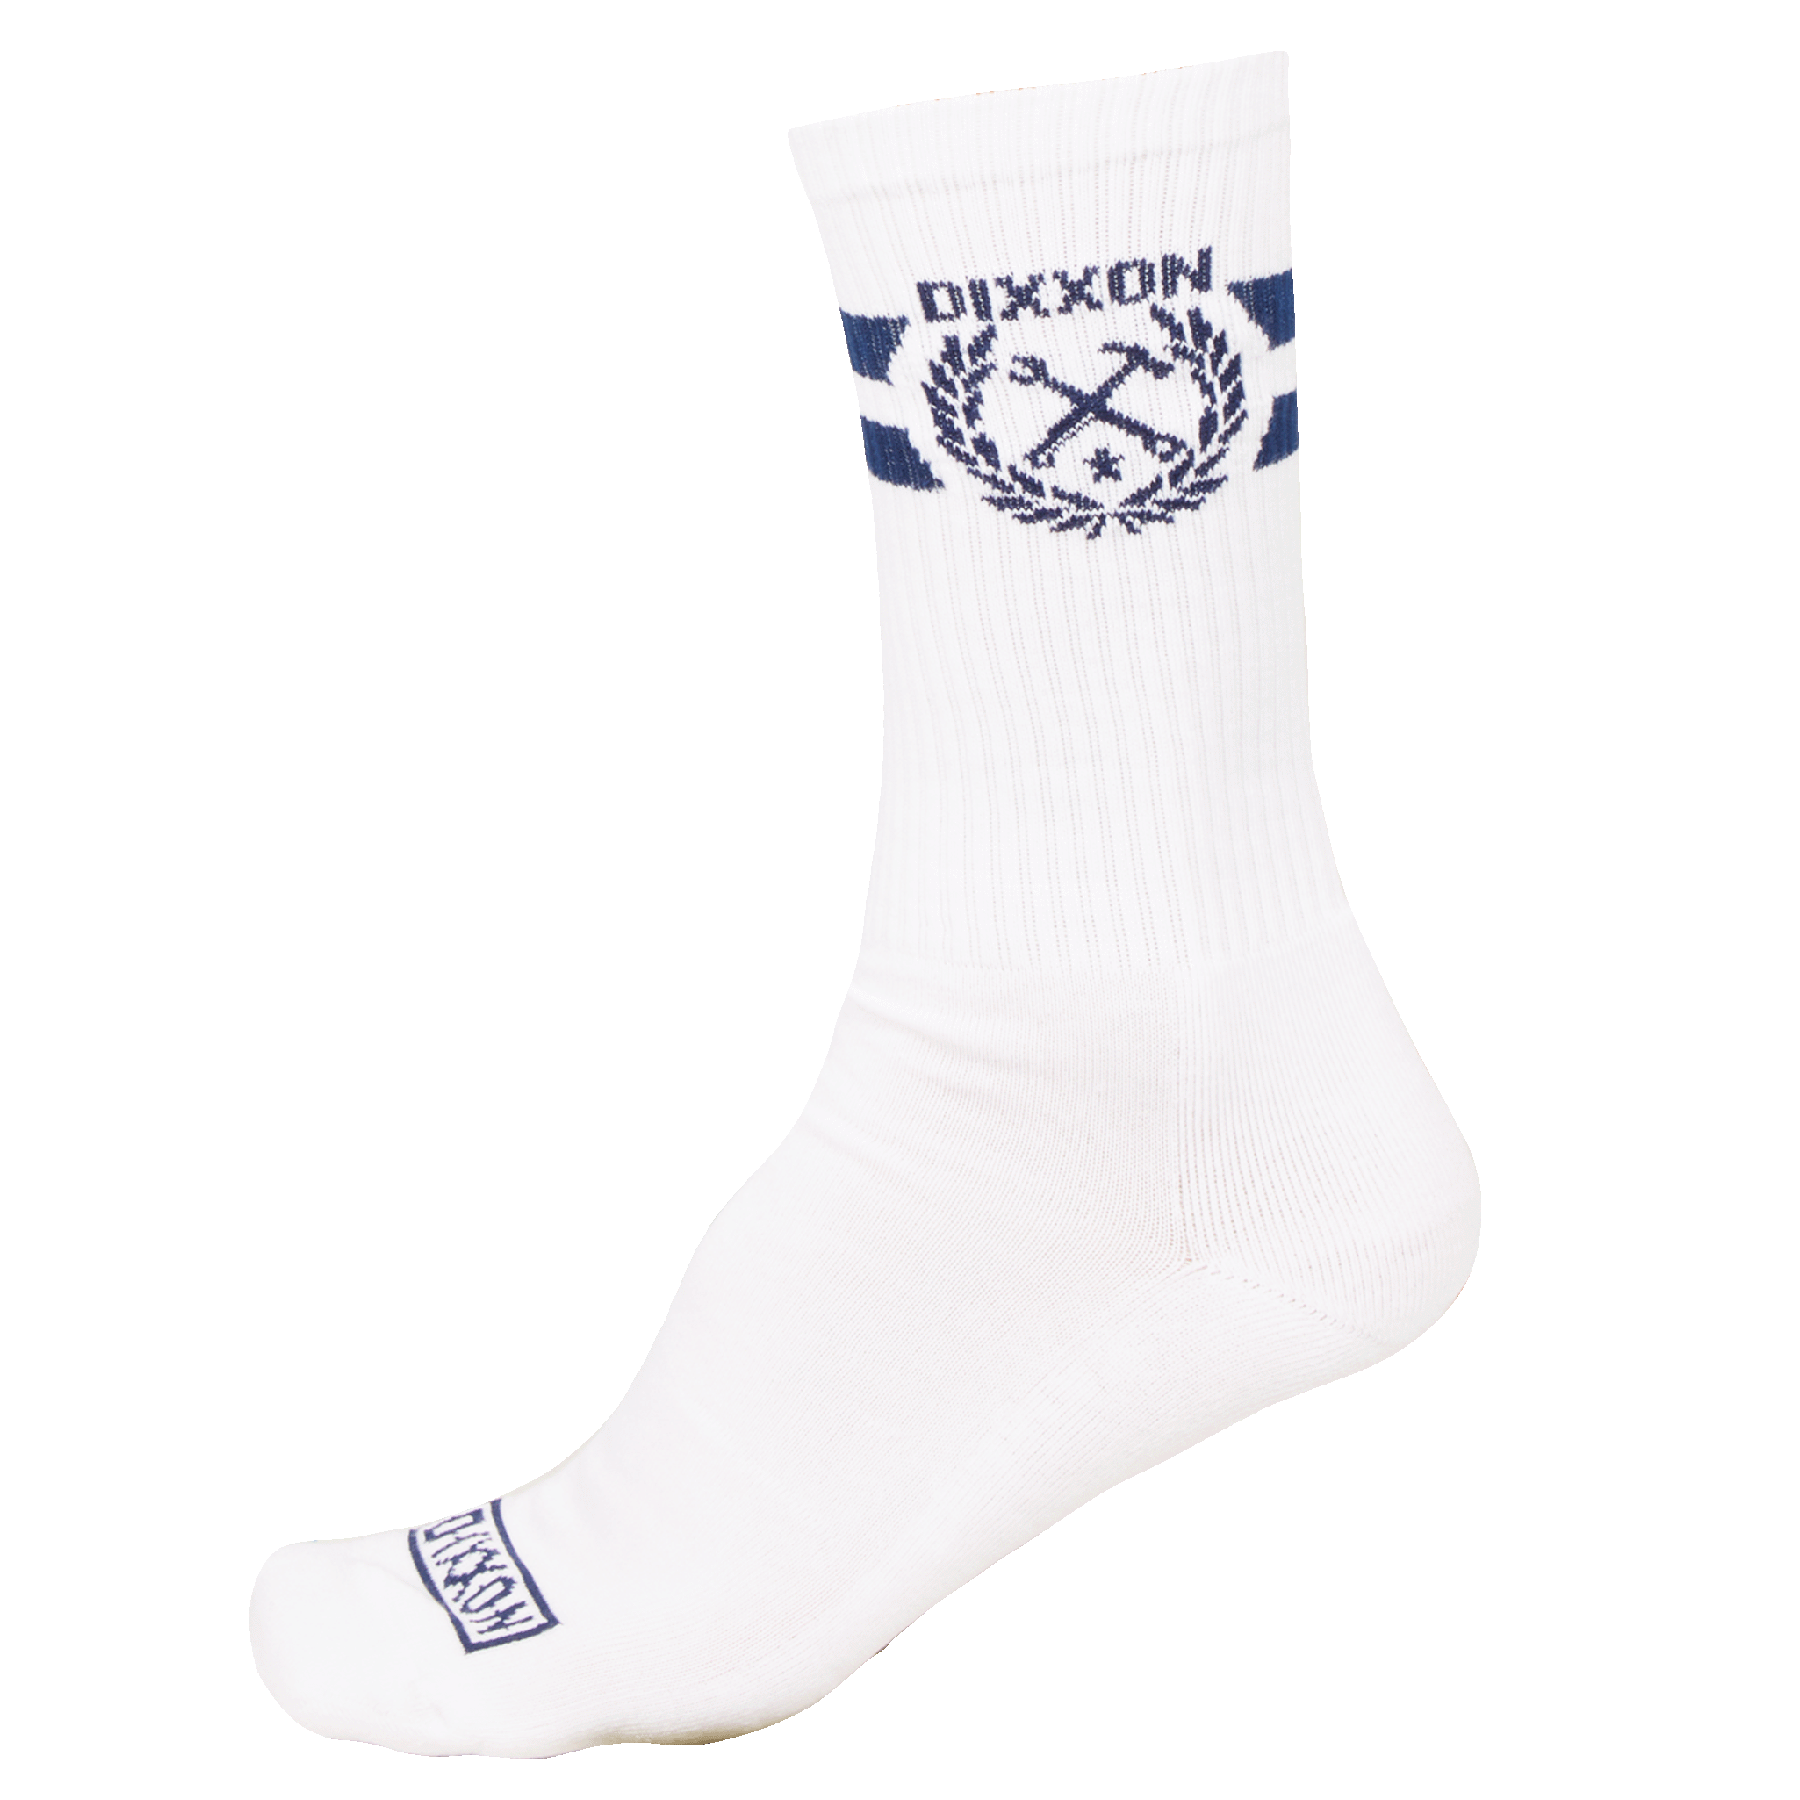 Stay Humble Premium Crew Socks - White & Blue | Dixxon Flannel Co.